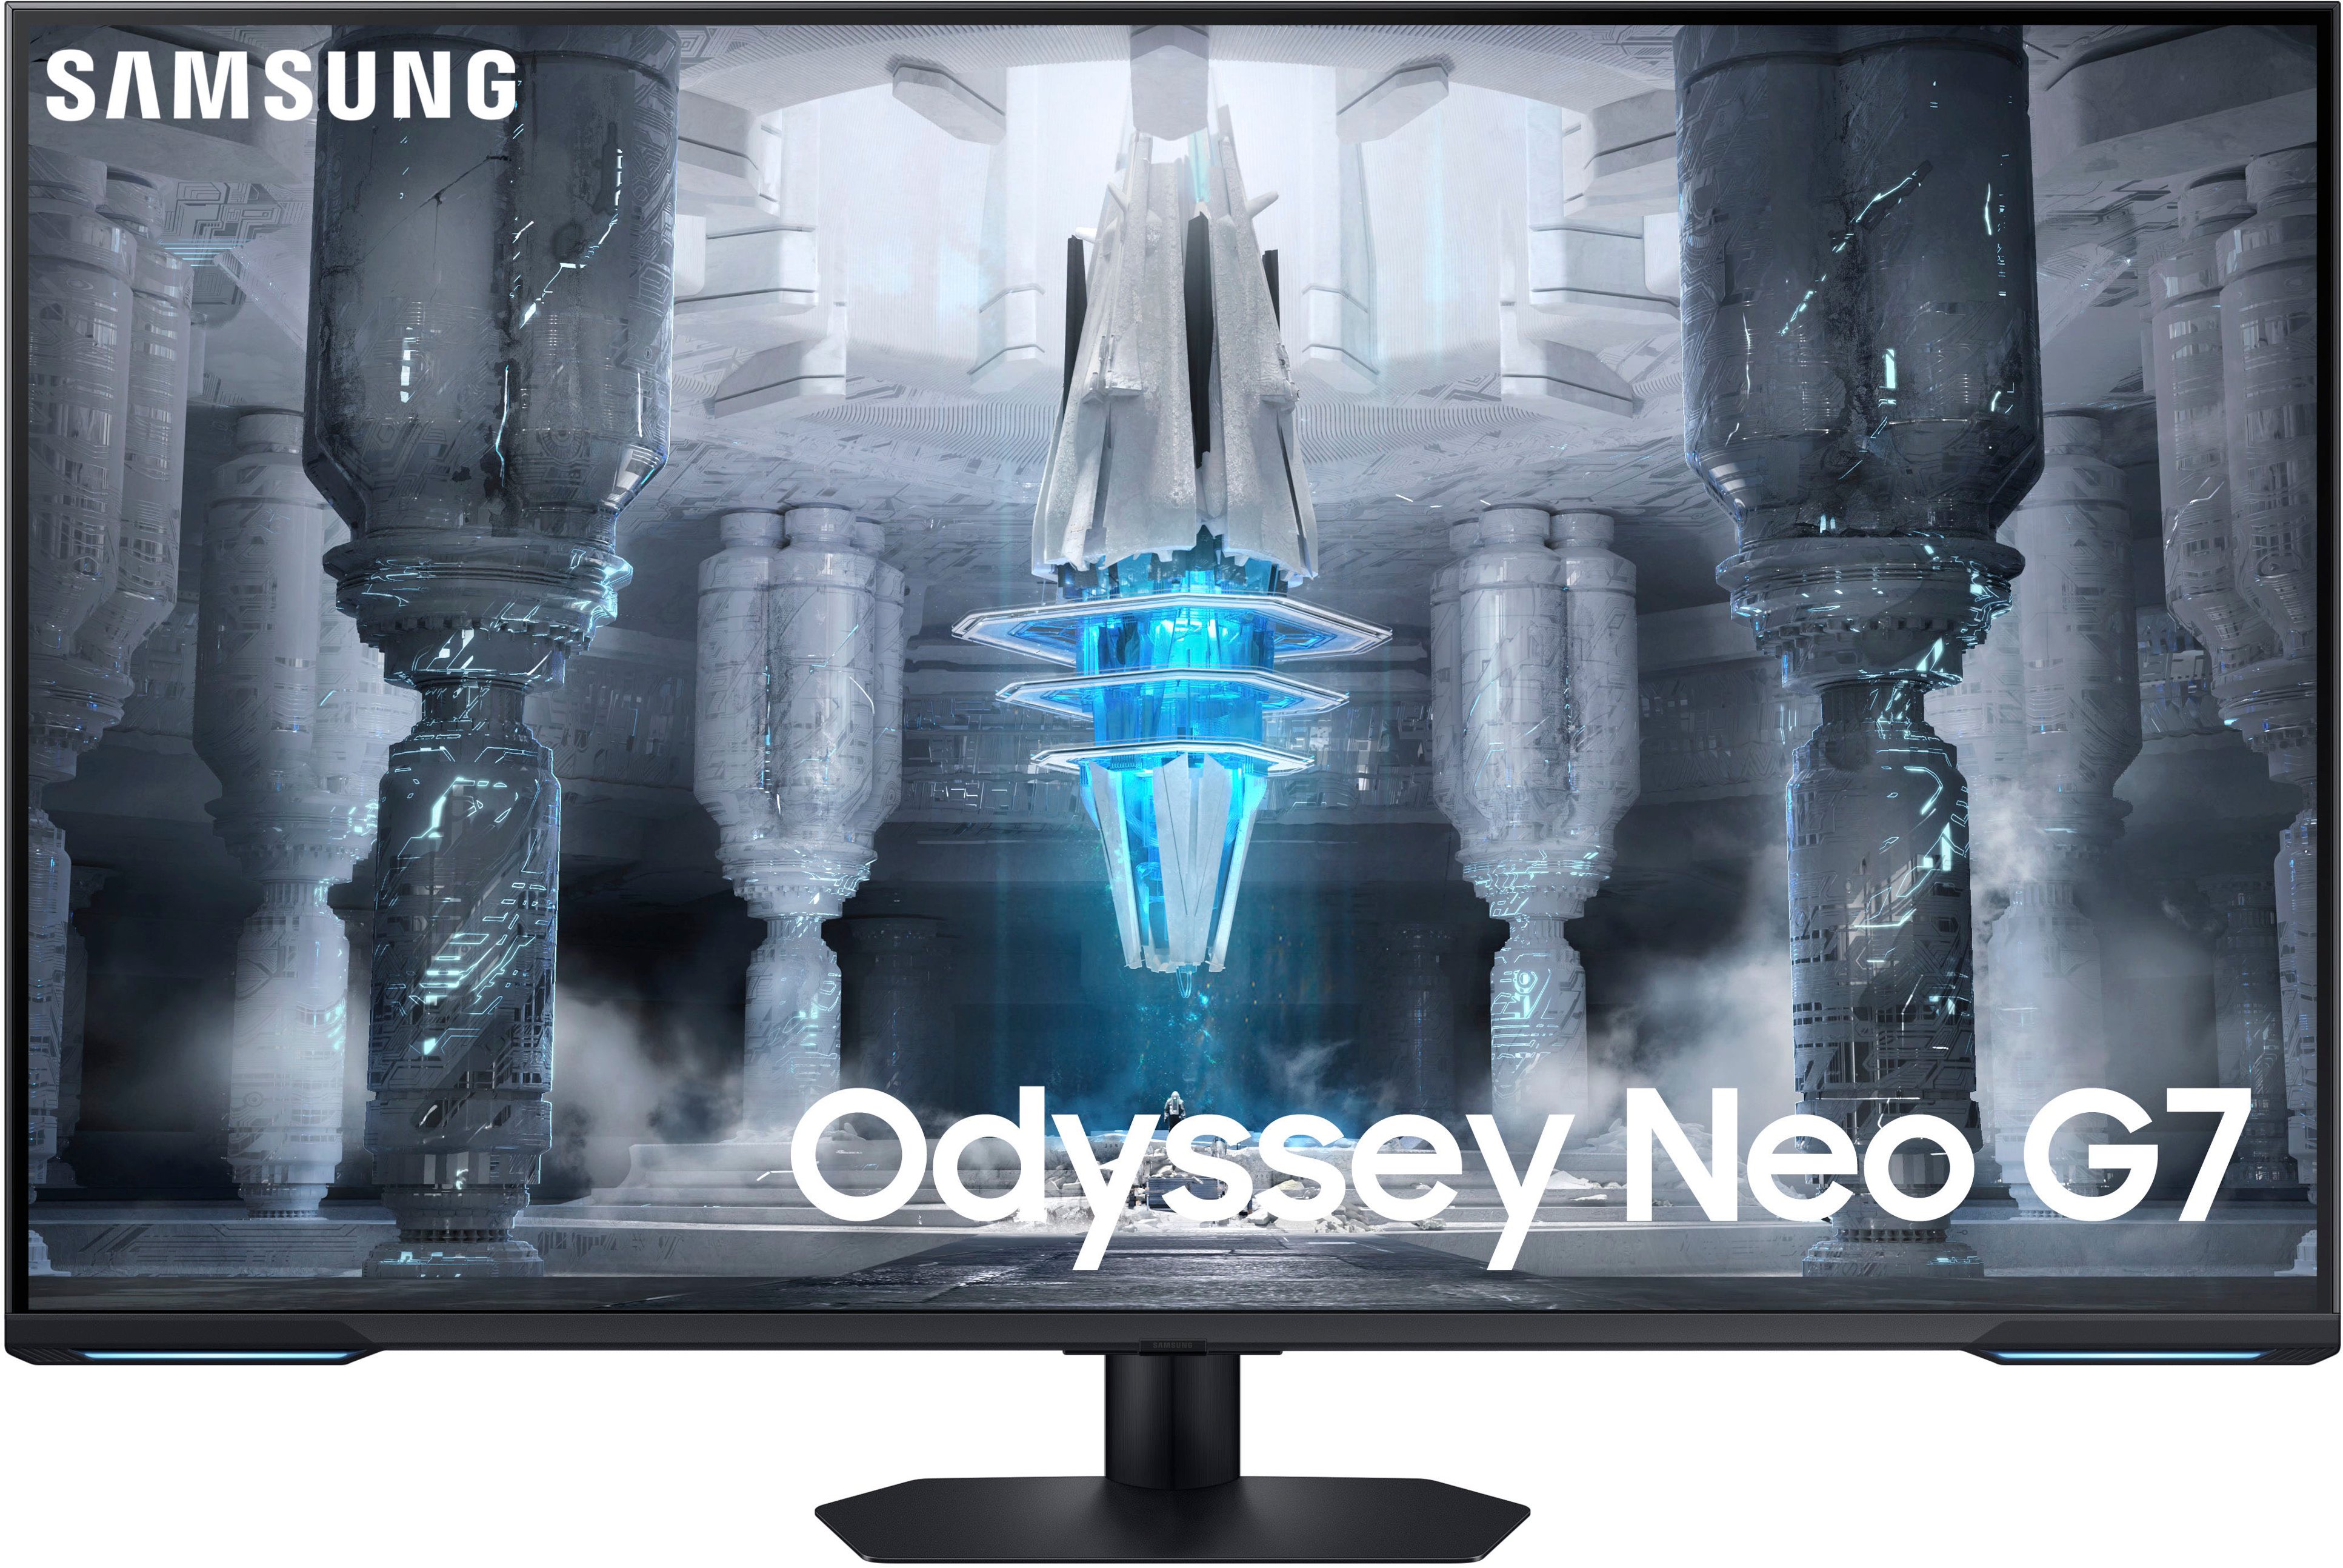 Samsung Odyssey G7 32 Monitor Review